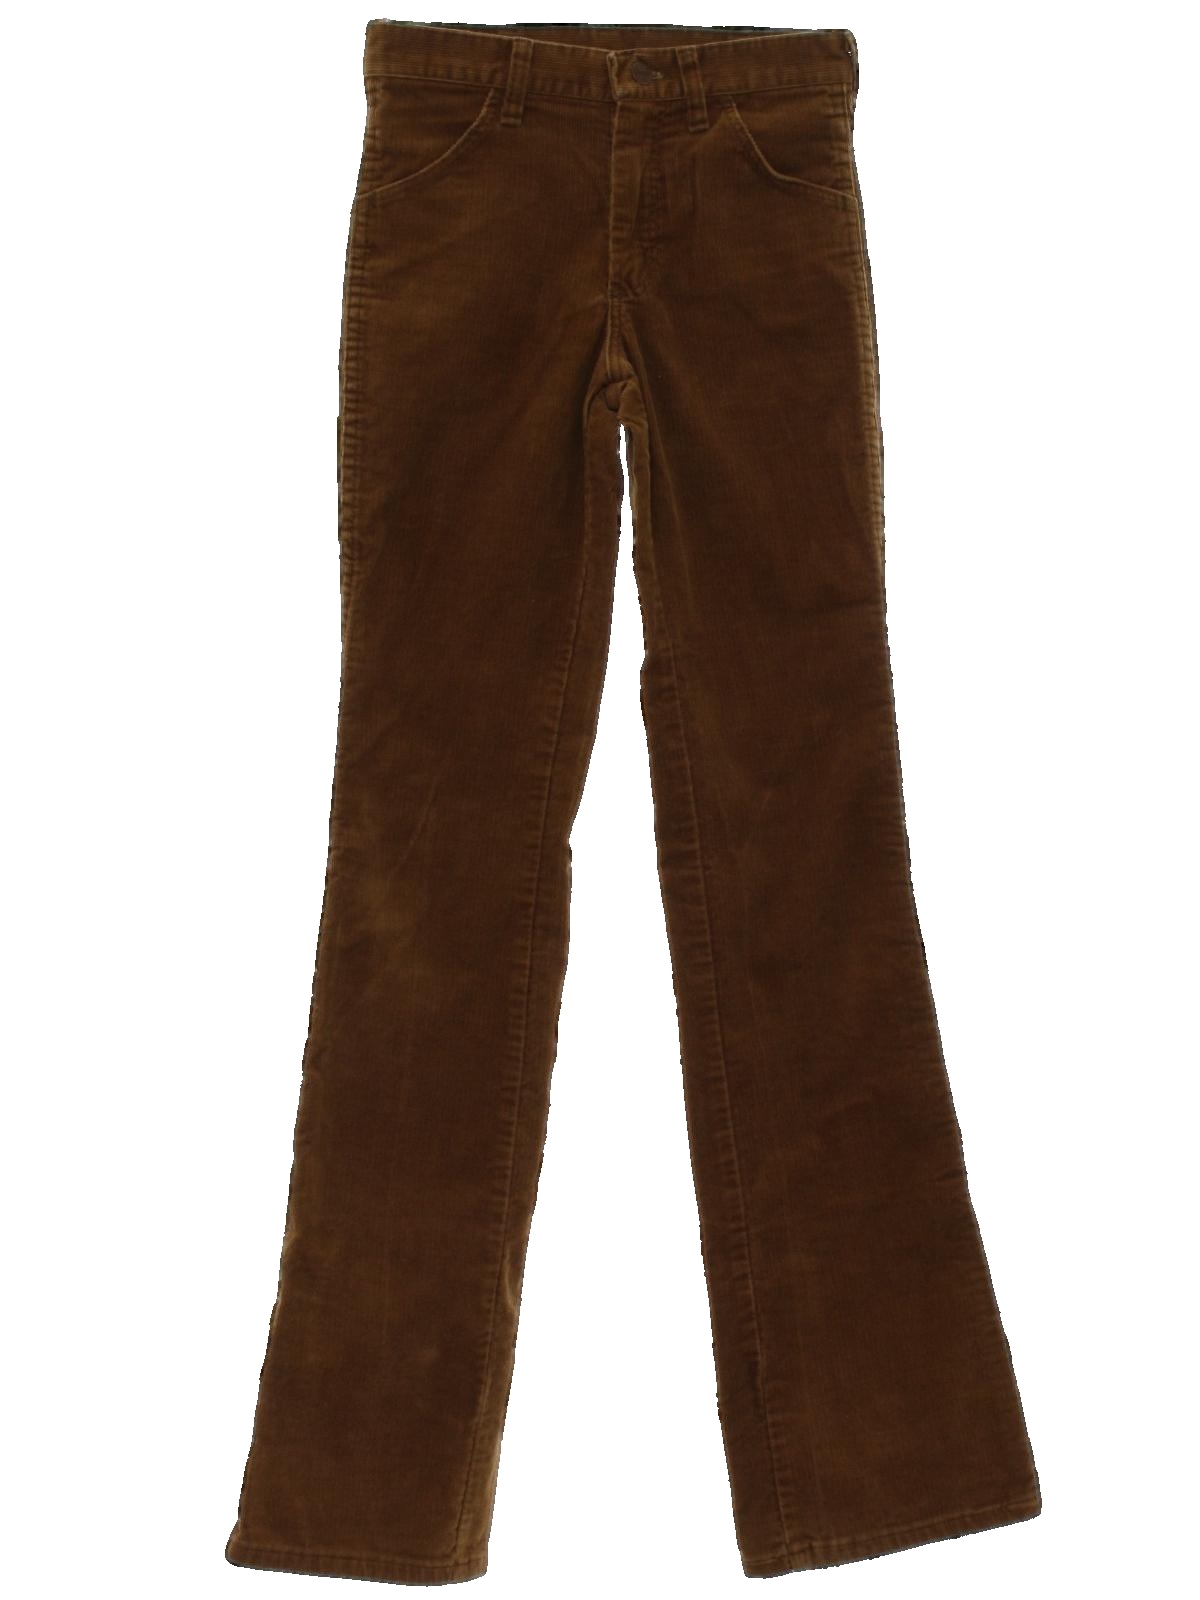 1970's Retro Flared Pants / Flares: 70s -Wrangler- Mens or Boys brown ...